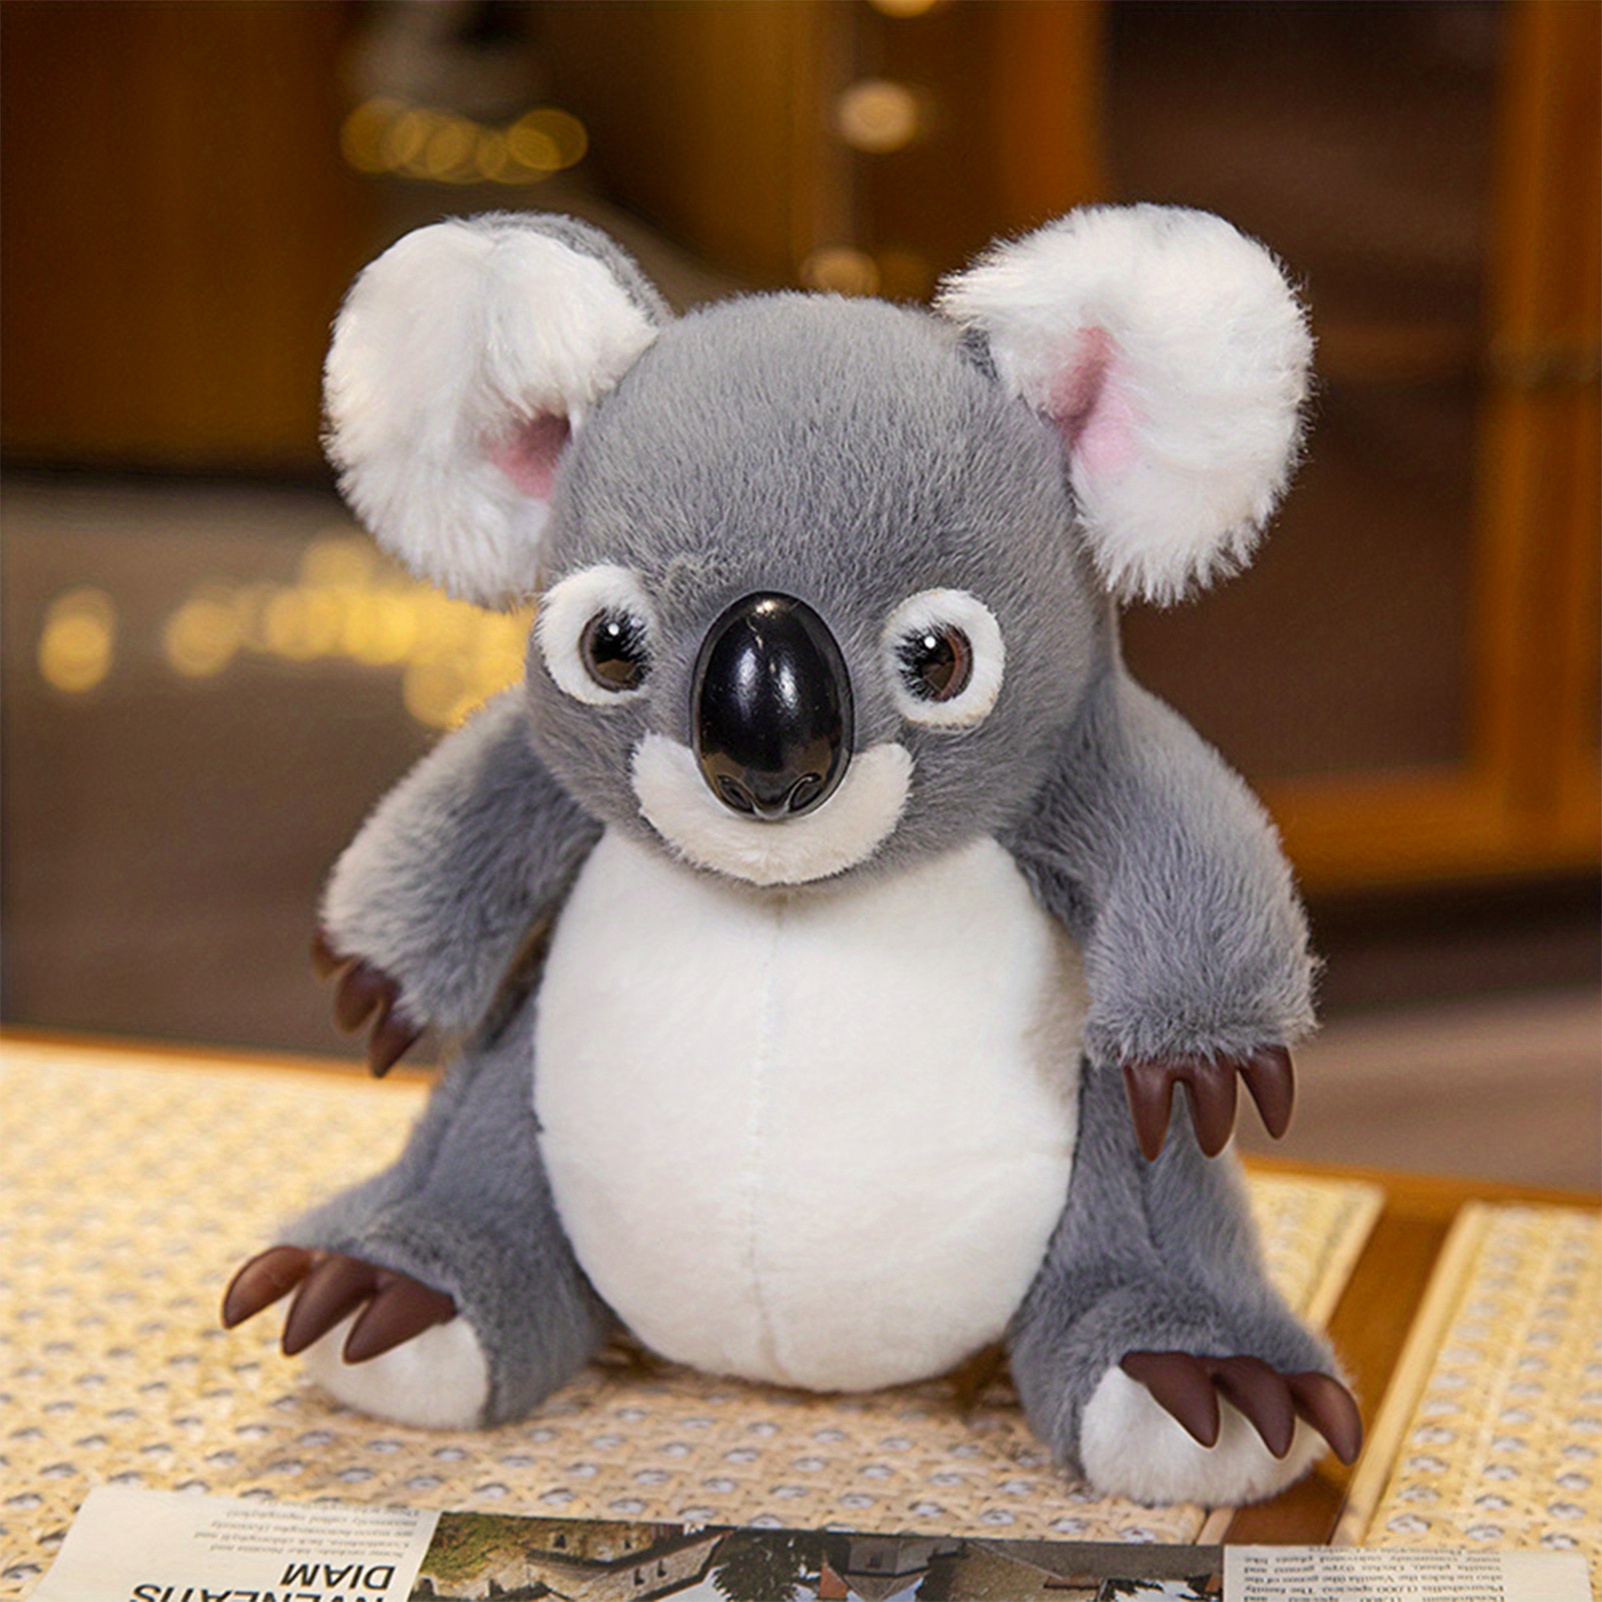 Koala Stuffed Animals & Koala Bear Plush